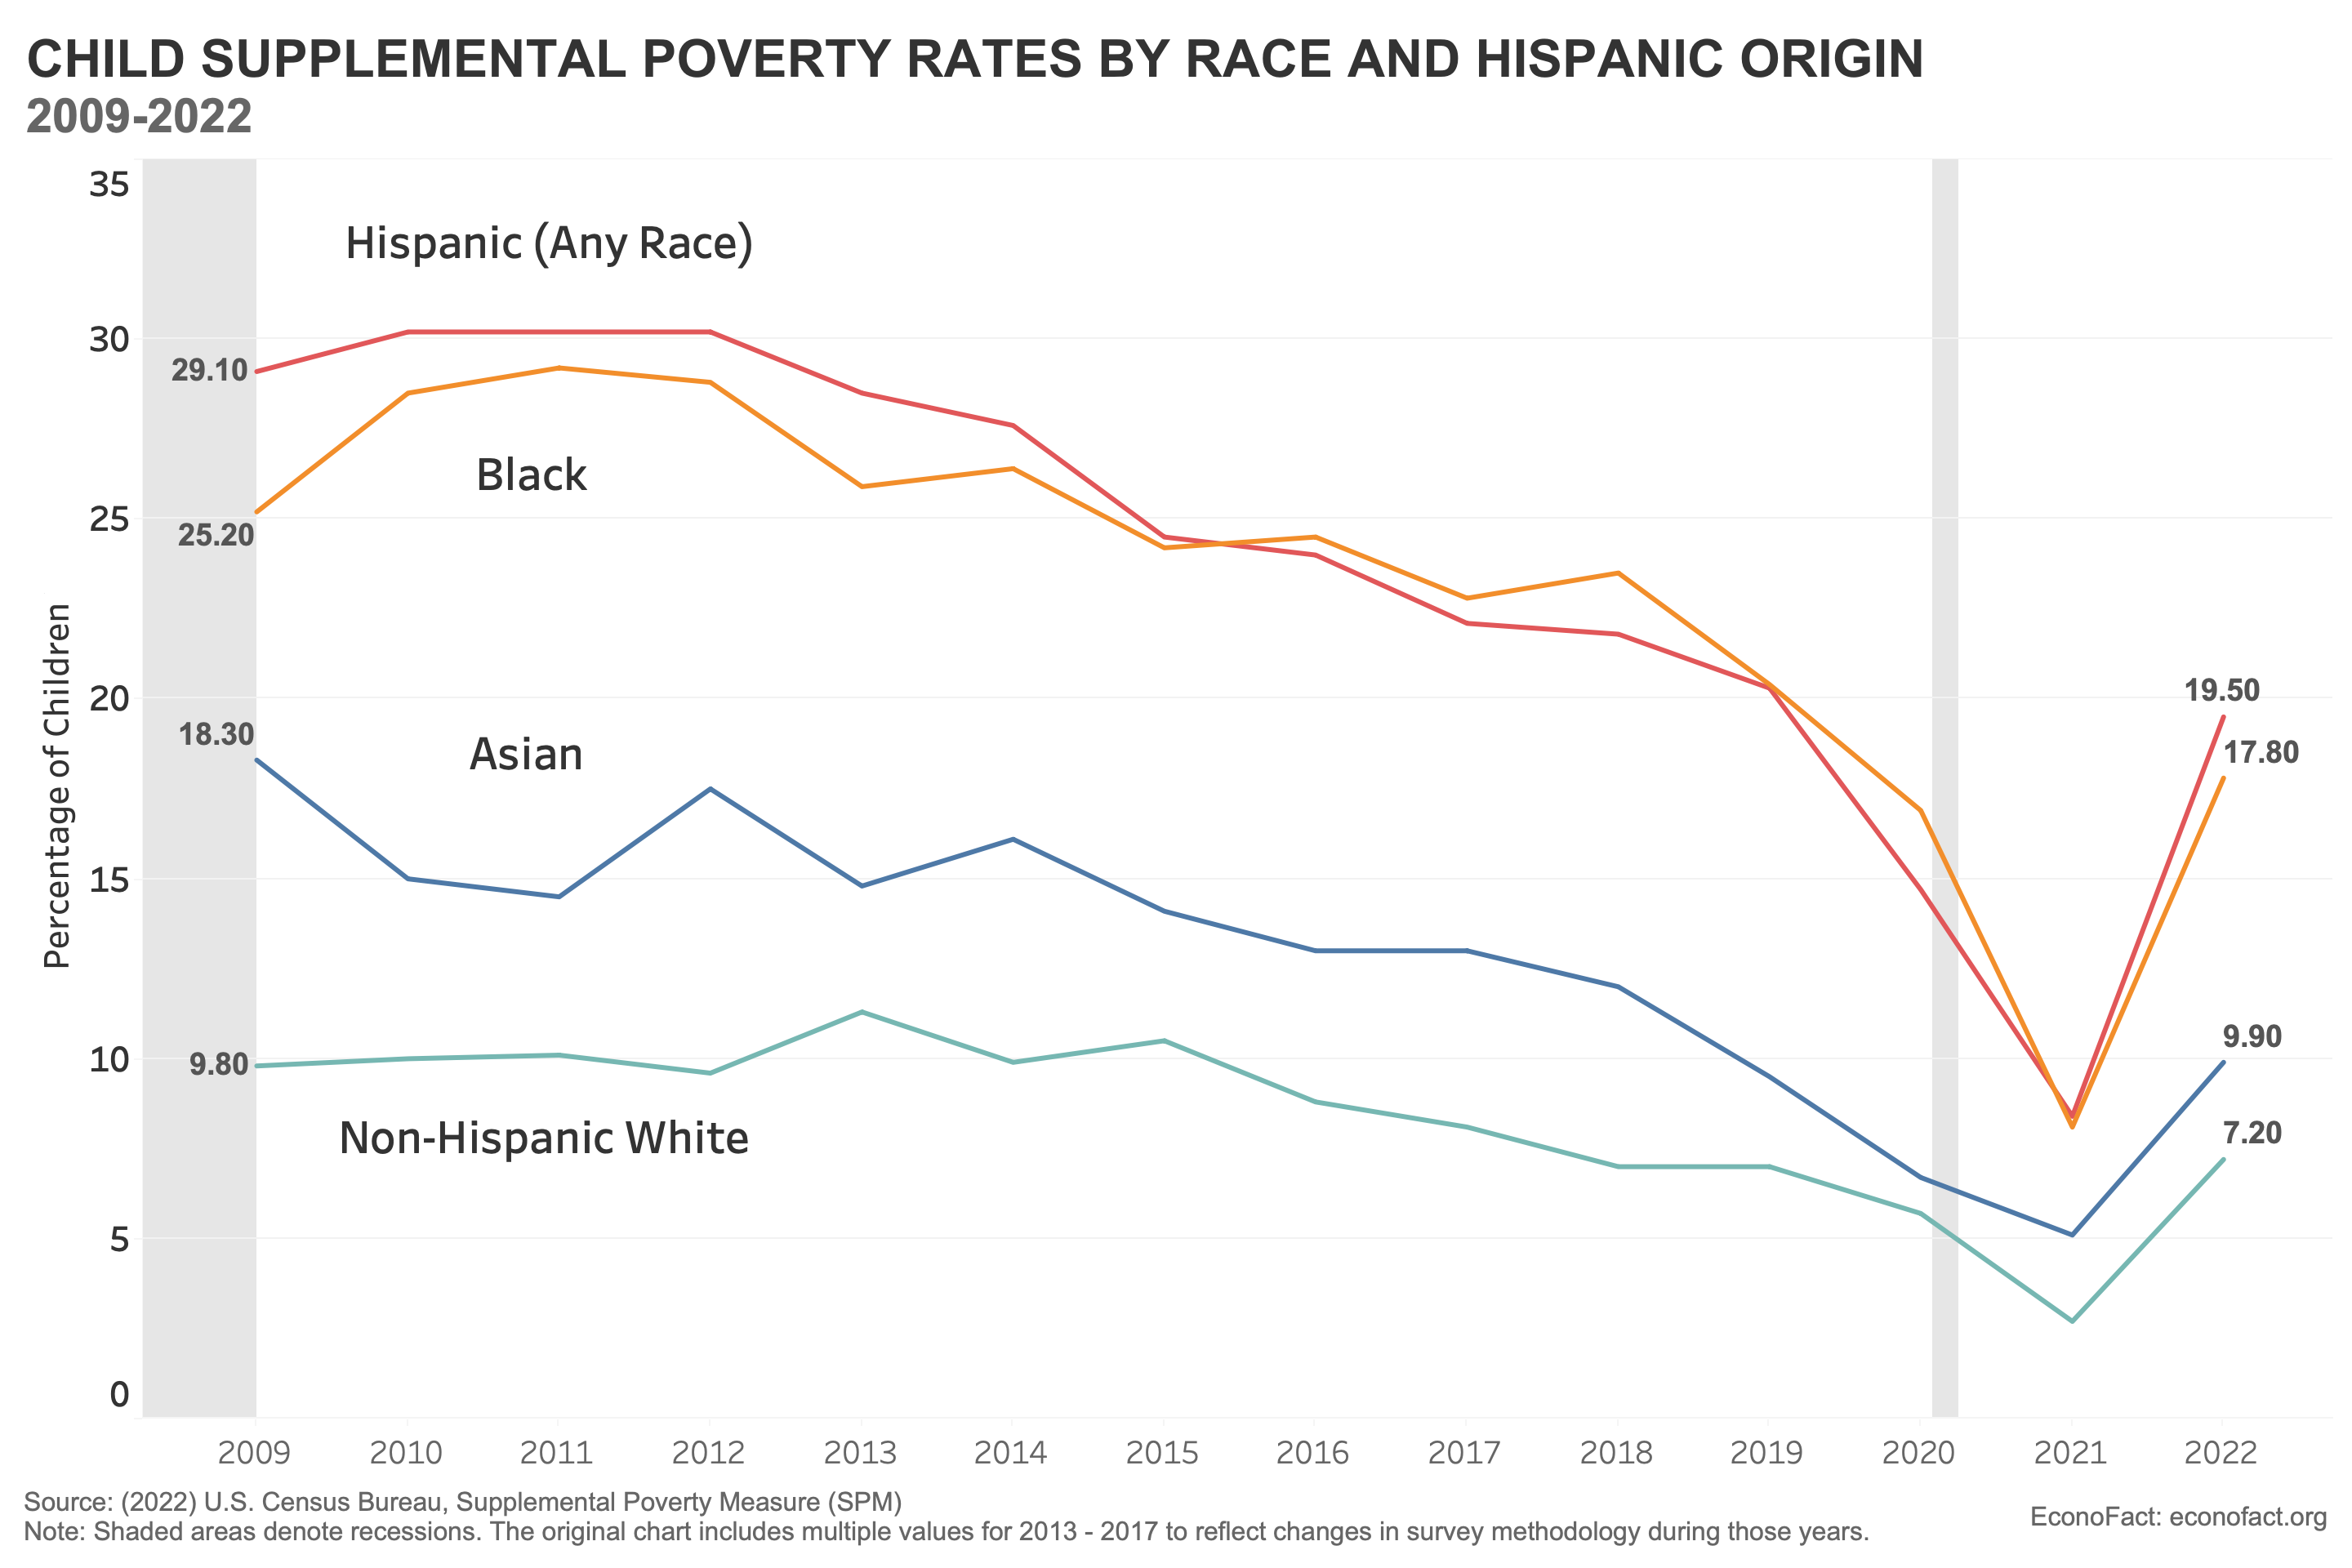 Poverty Among Hispanic Children in the U.S.